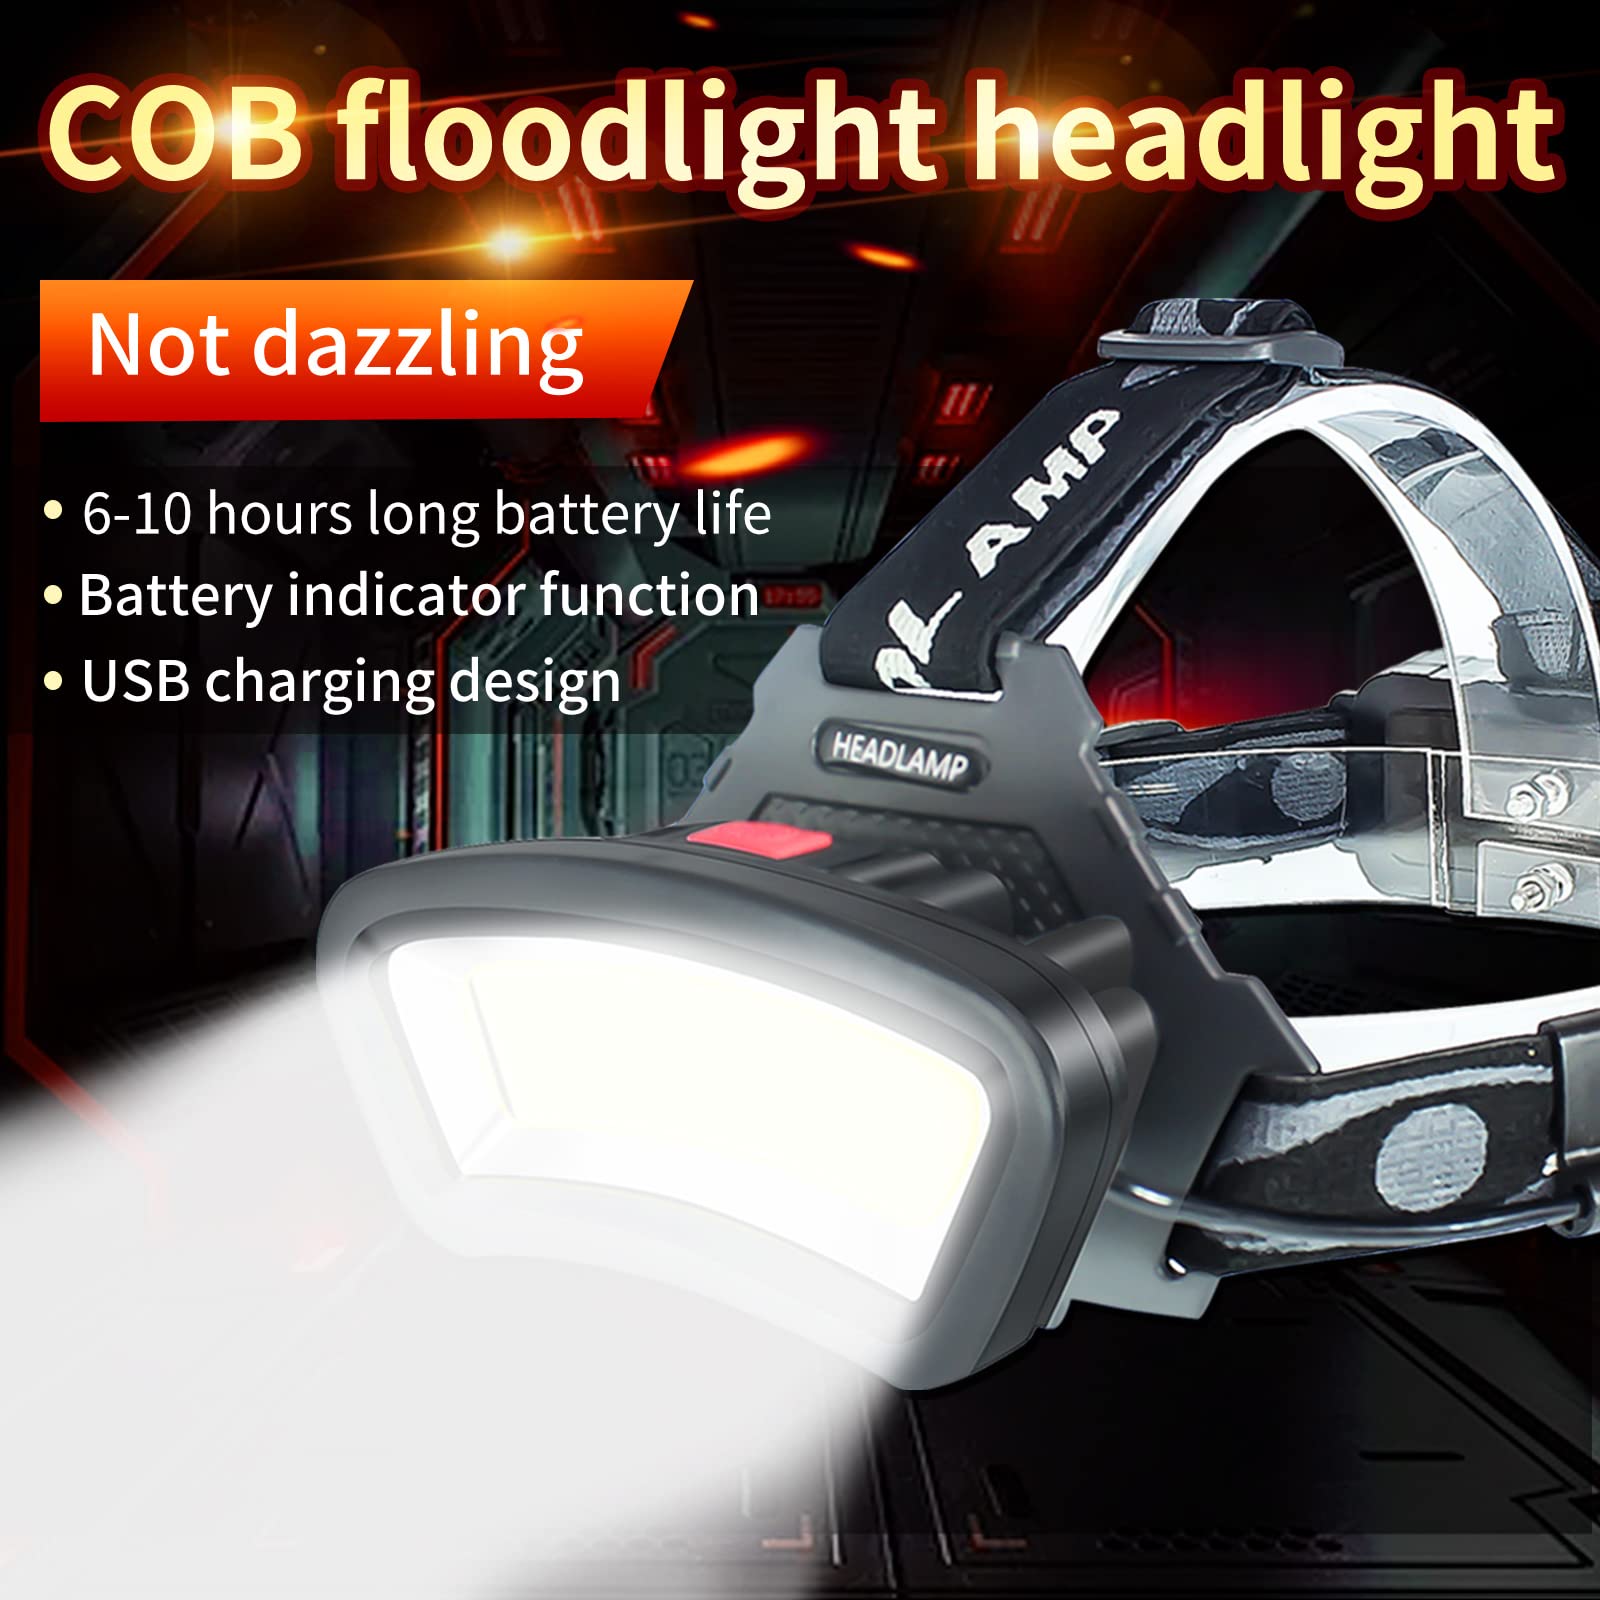 DARKBEAM COB Floodlight Headlamp USB Rechargeable with Red Light, 2000 Lumen LED Headlight - Car Maintenance and Night Construction 6-10 Hours Long Battery Life